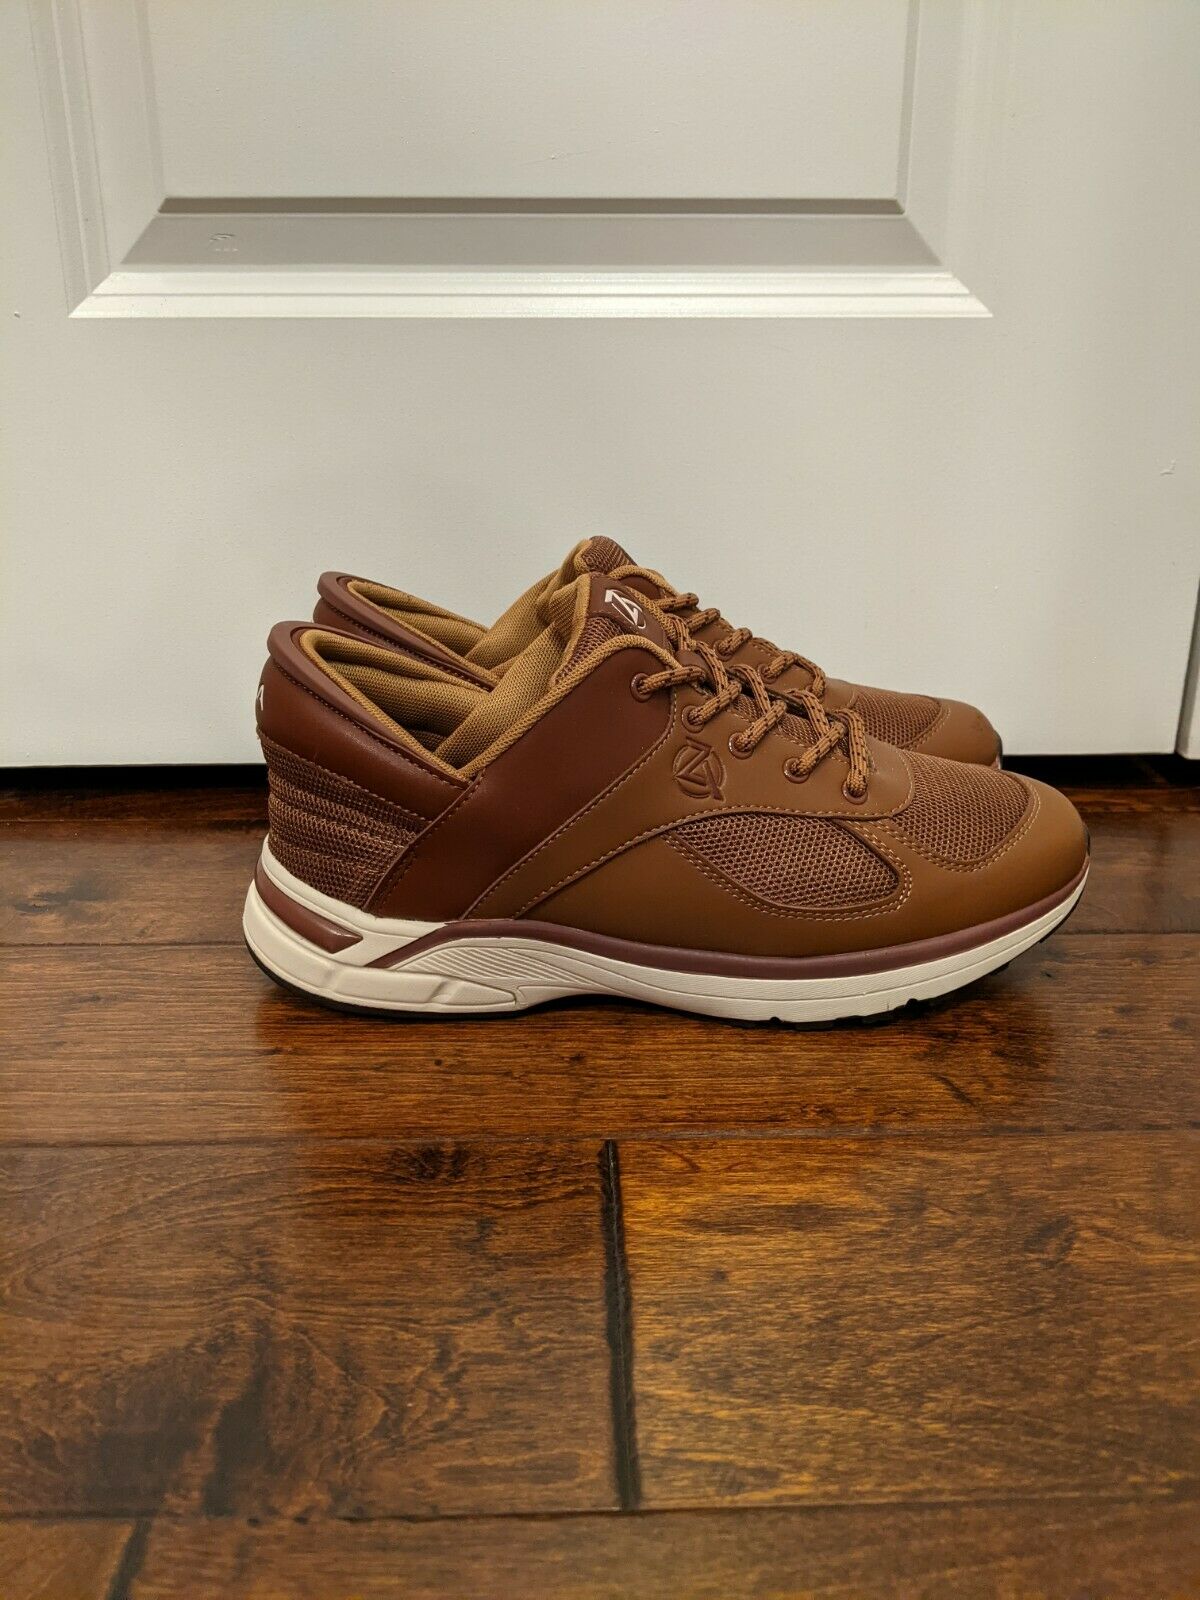 Zeba Hands Free Sneakers Brown Comfort Walking Shoes Mens Slip On Size 10.5